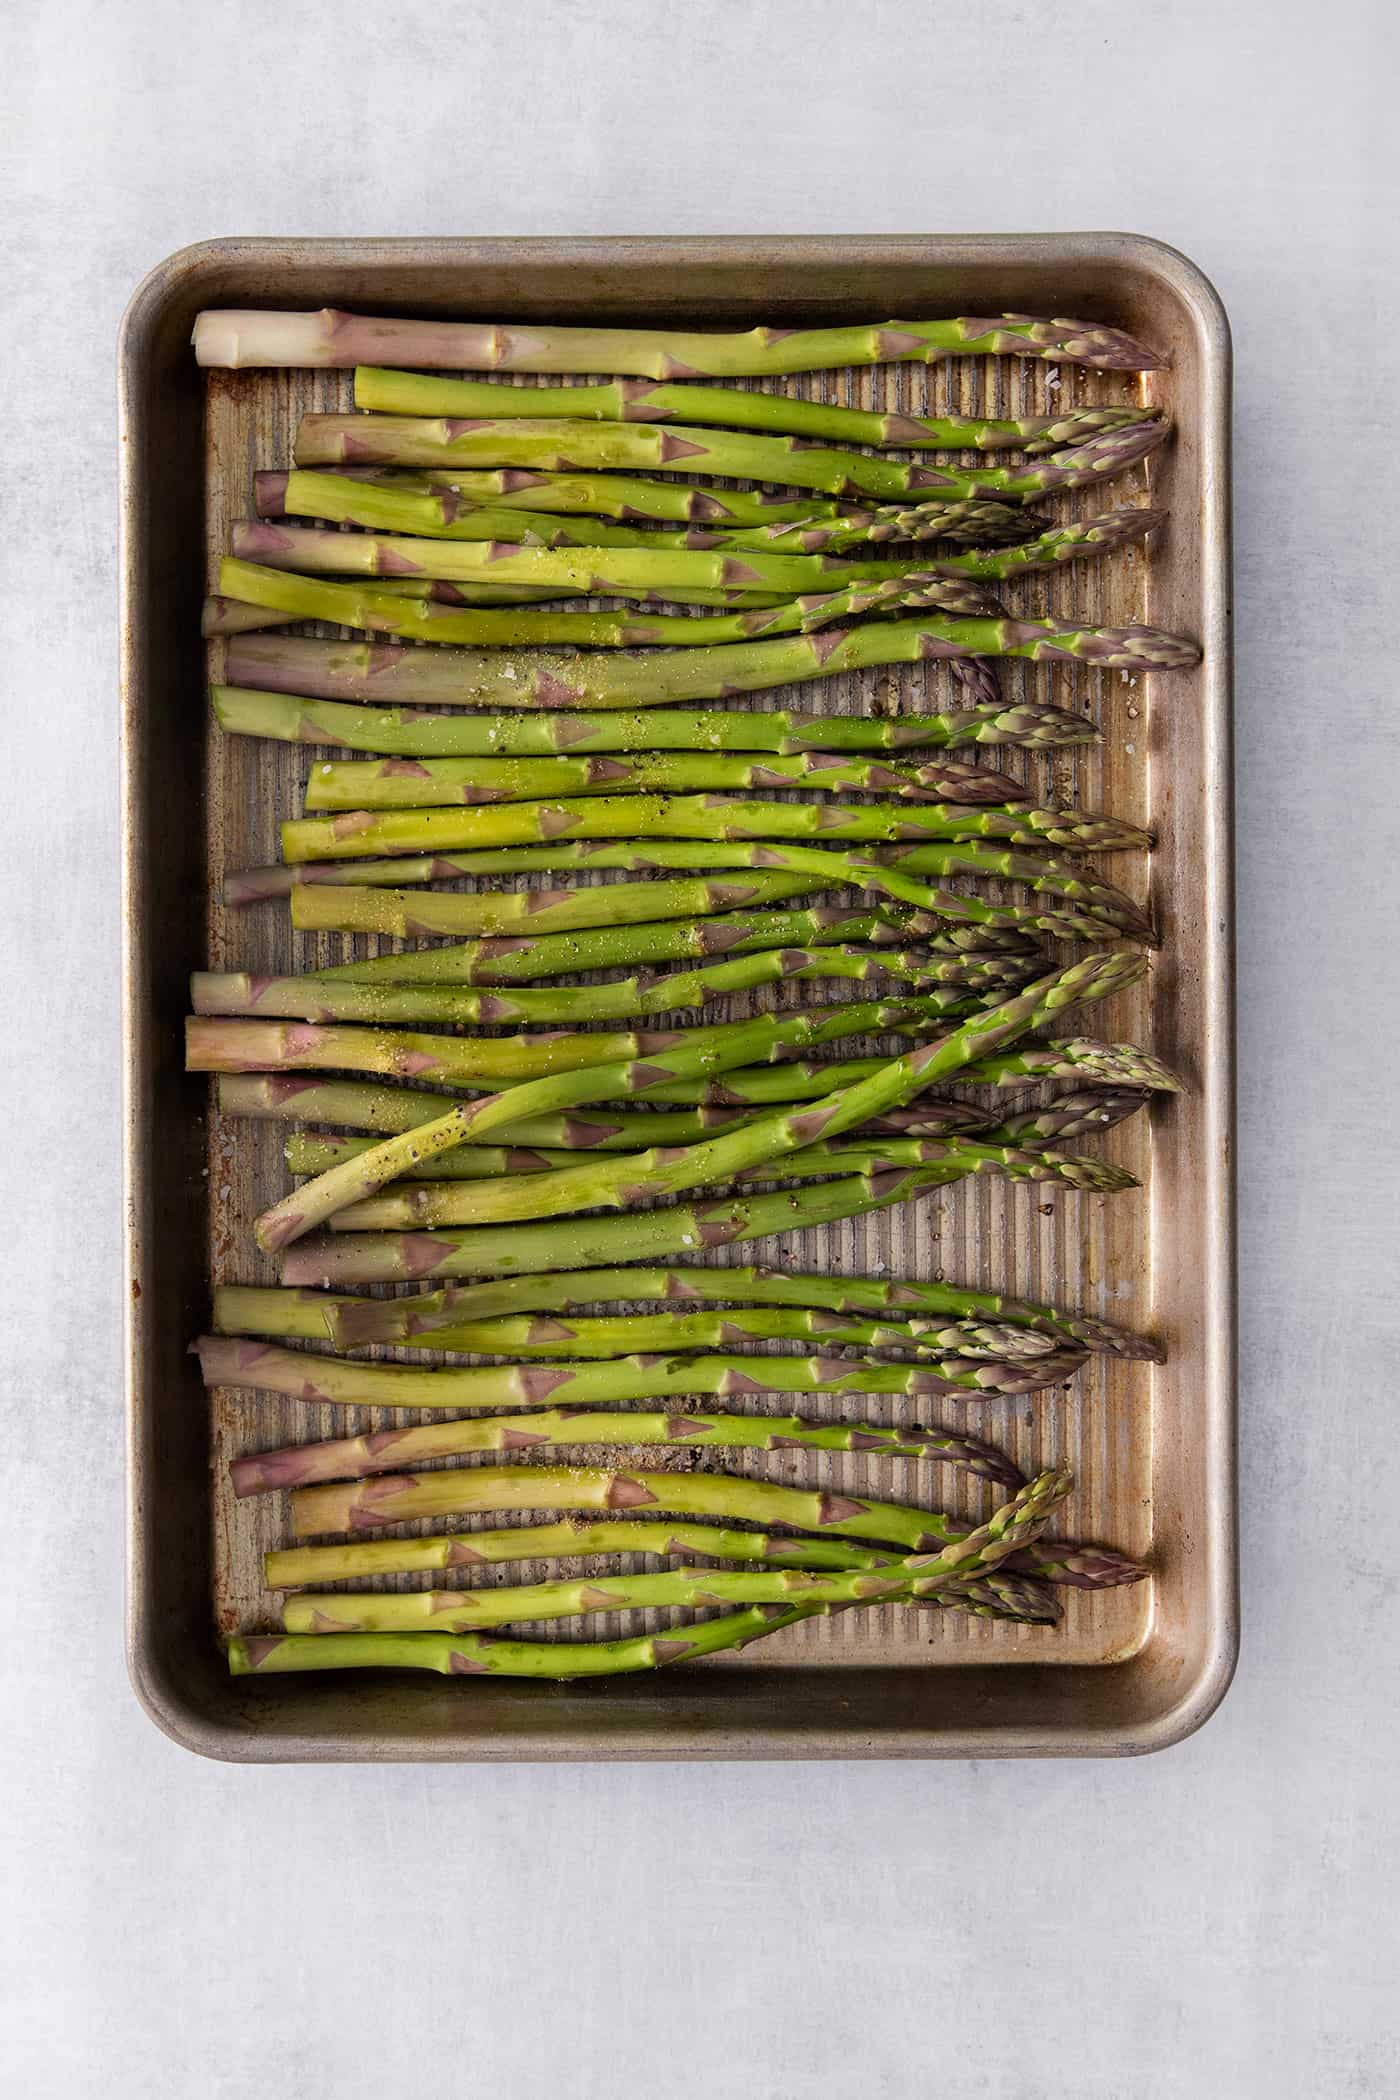 Asparagus stalks on a baking sheet